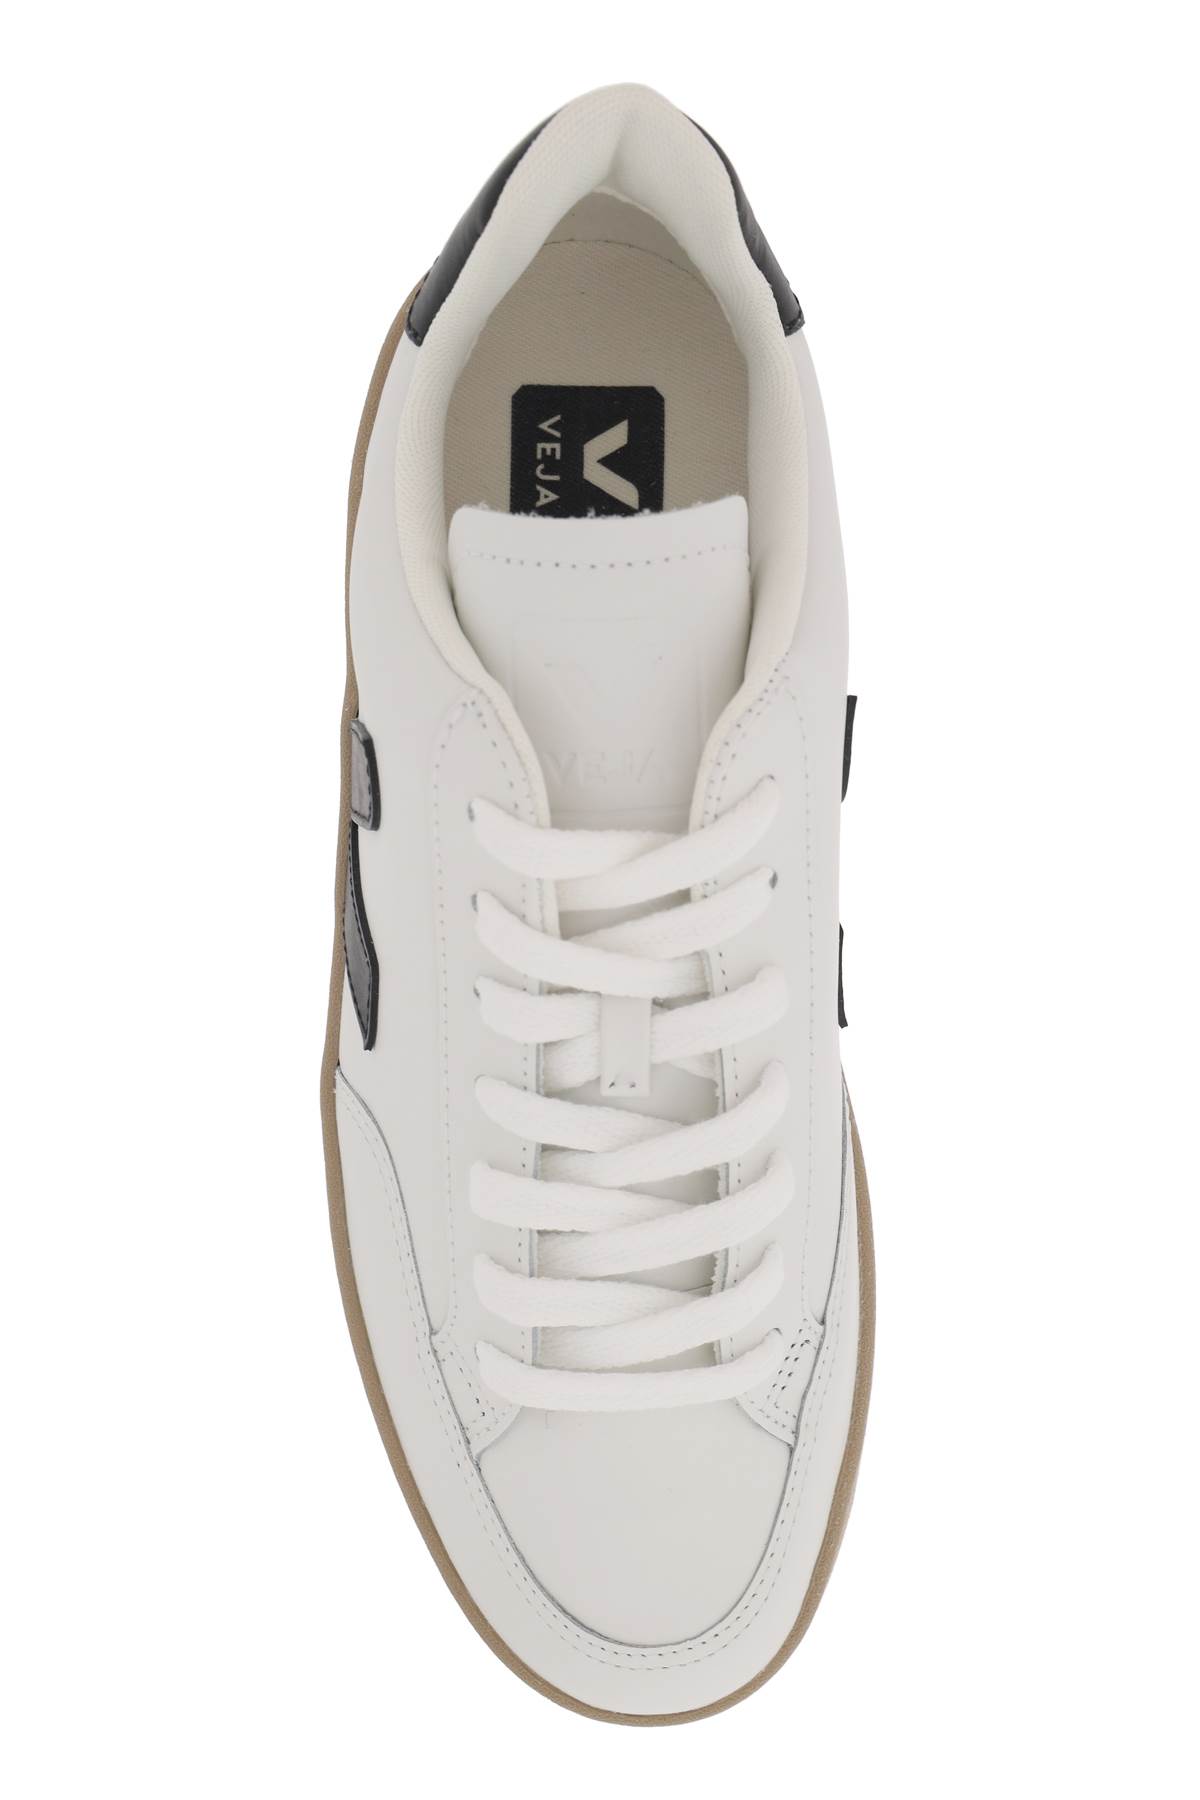 Shop Veja Leather V-12 Sneakers In Extra White Black Dune (white)